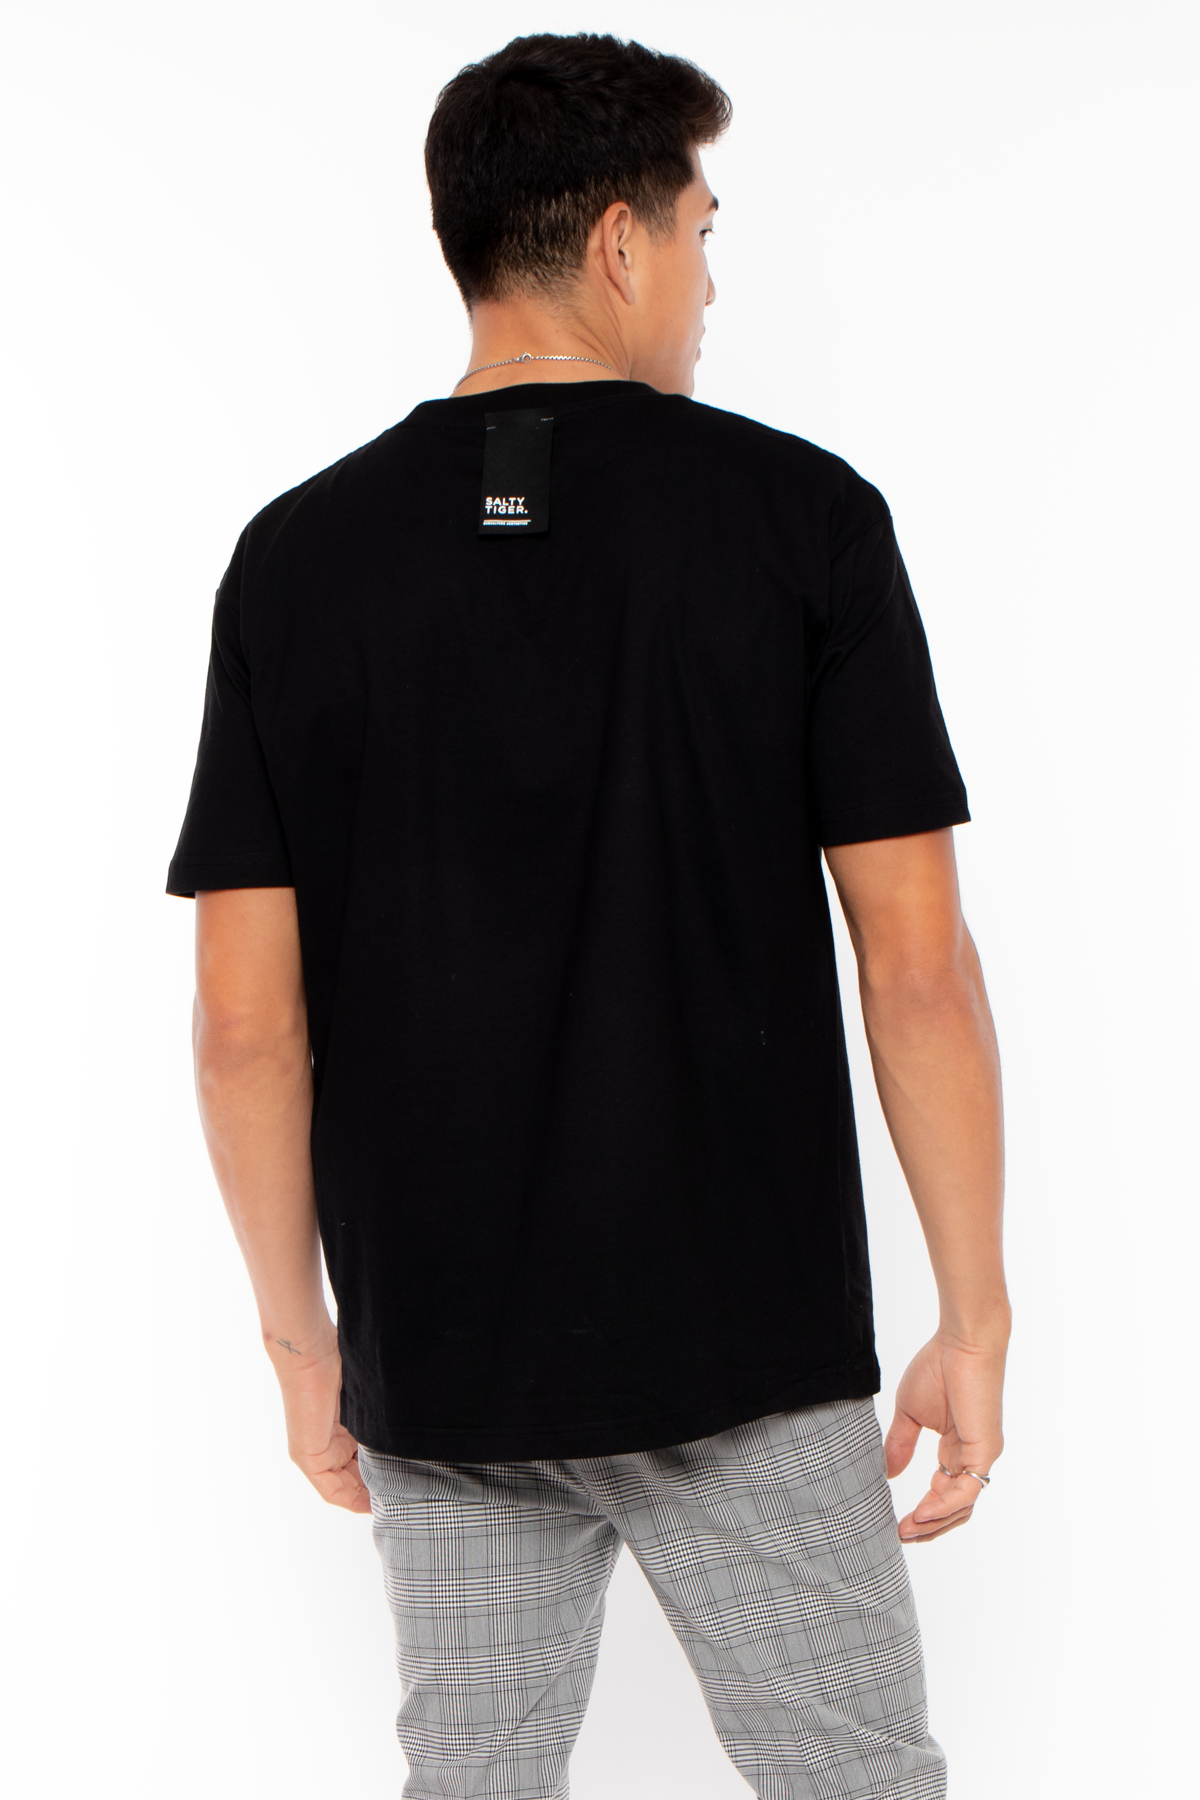 Heavy S/S T-Shirt - STTP0087-008 - Black